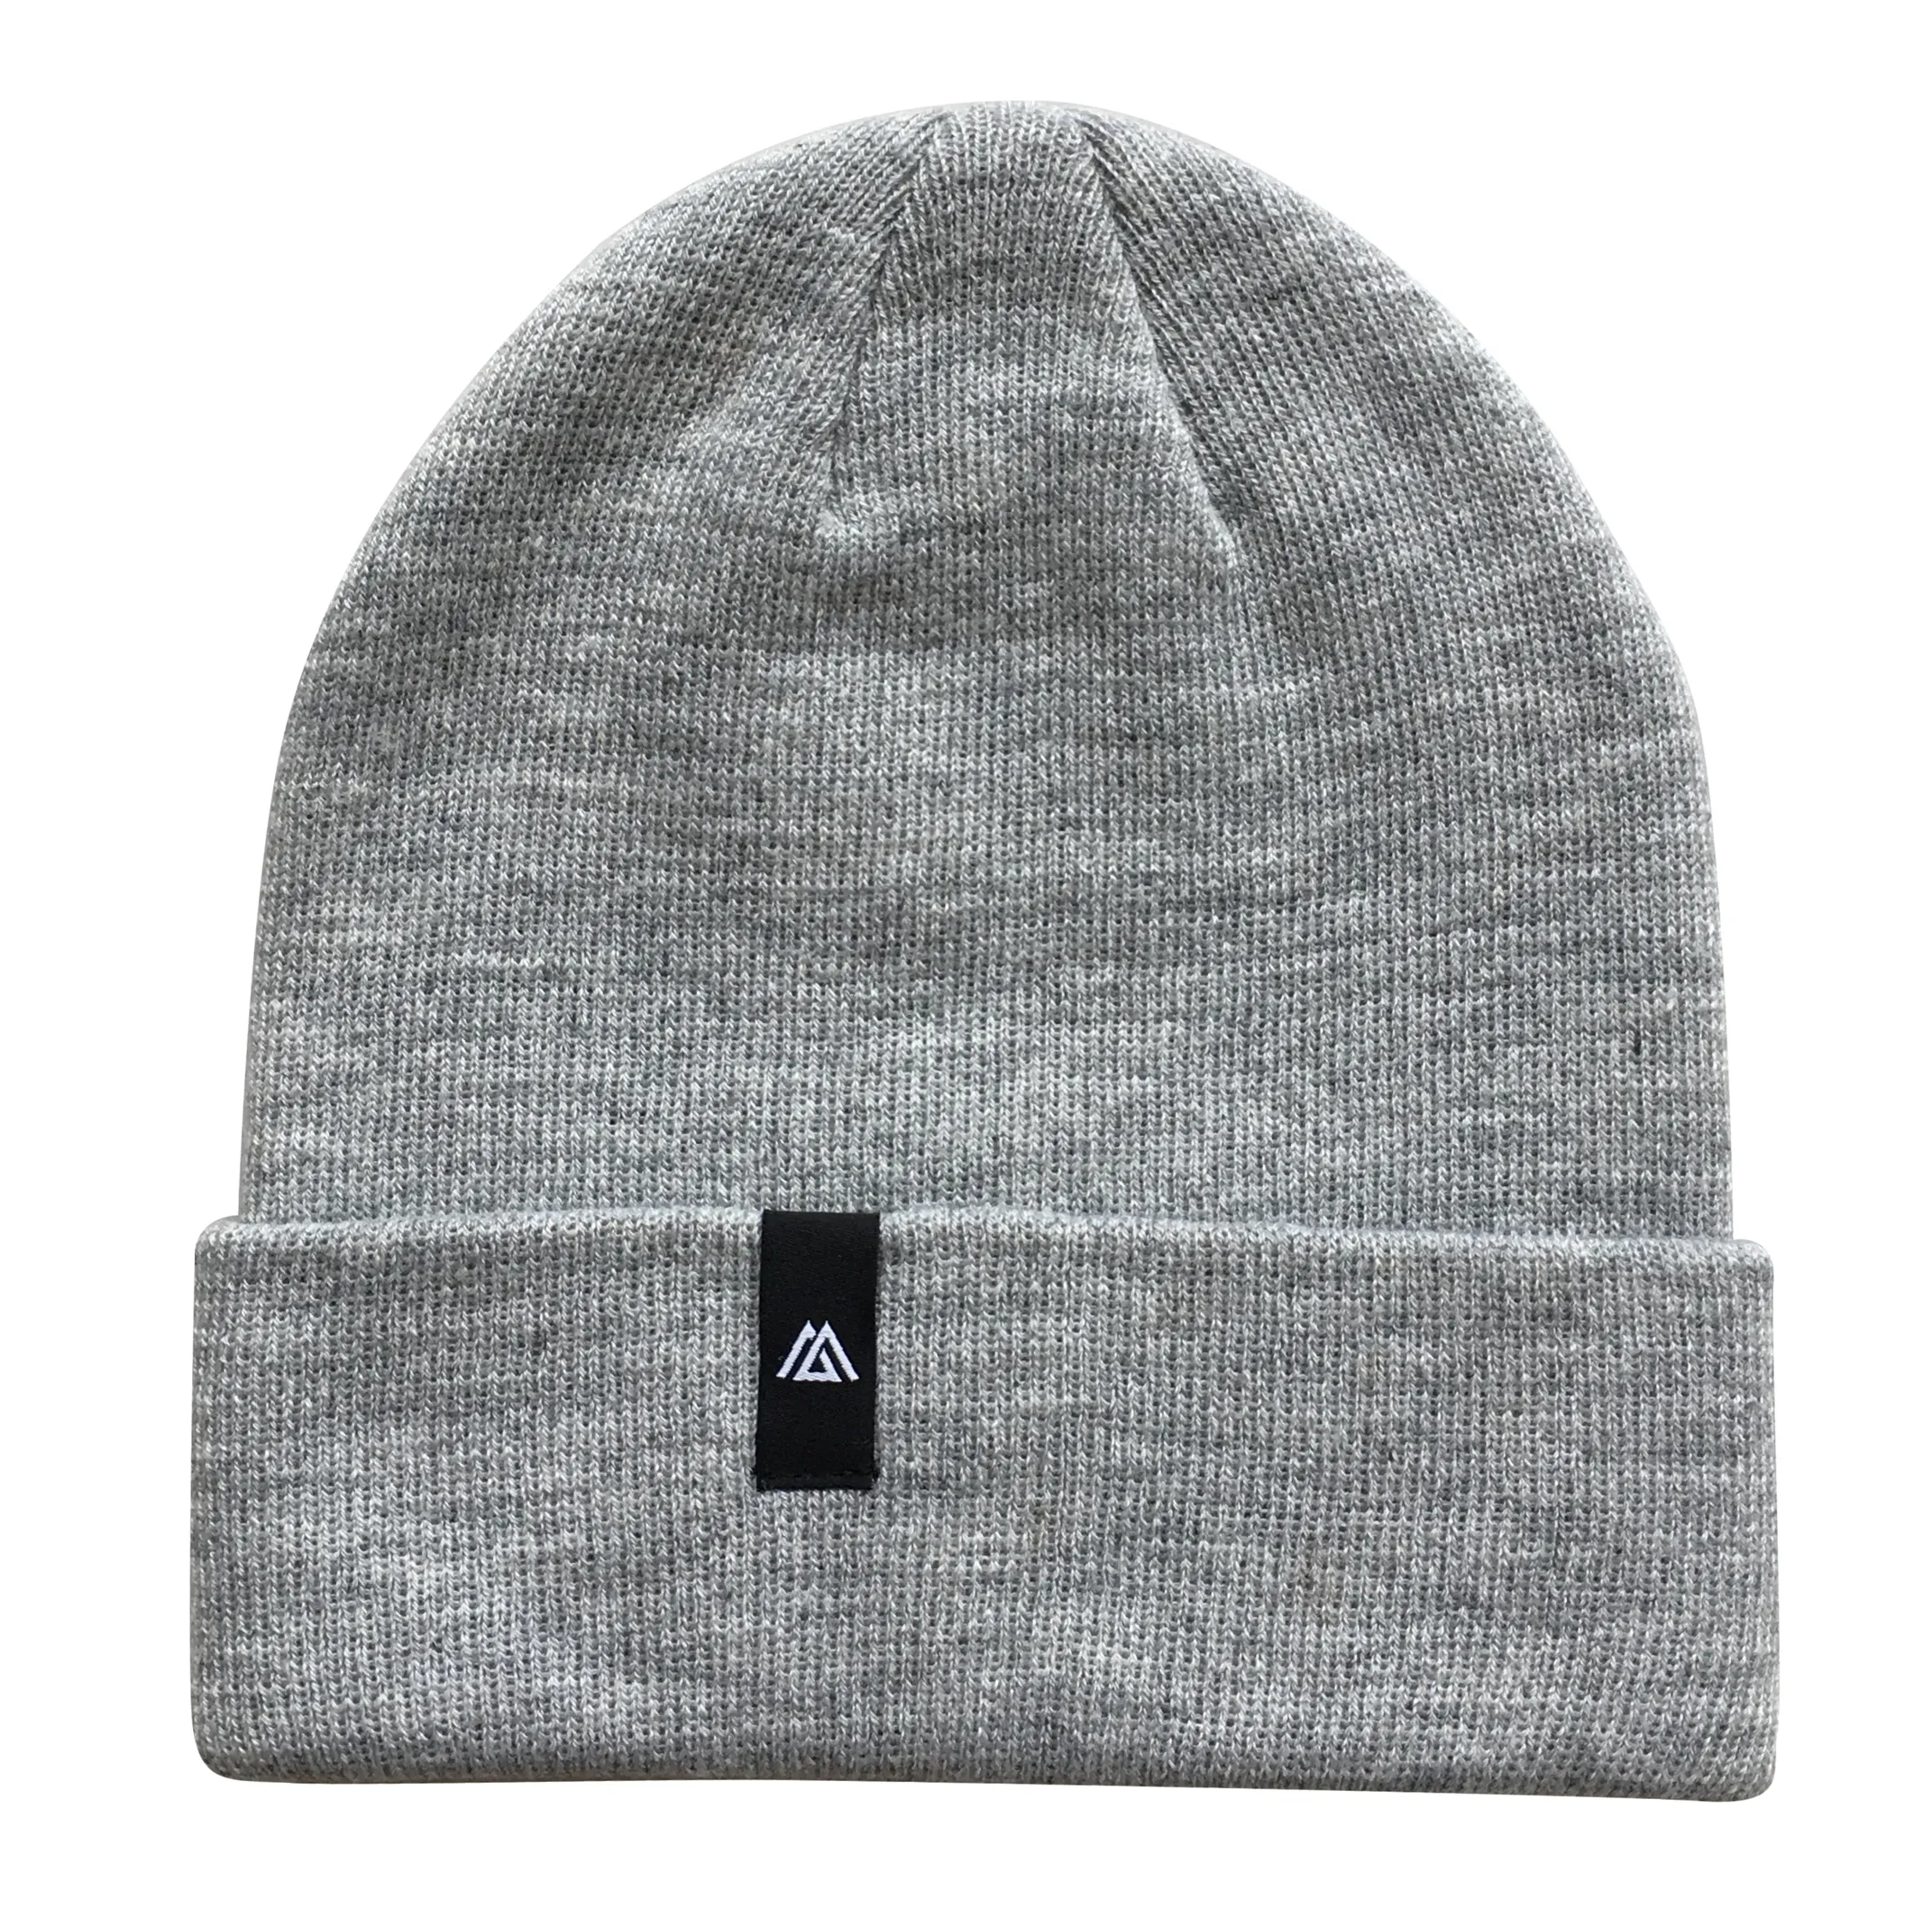 Popular heat grey warm winter beanie hat supplier black woven label kitting hats beanie Caps